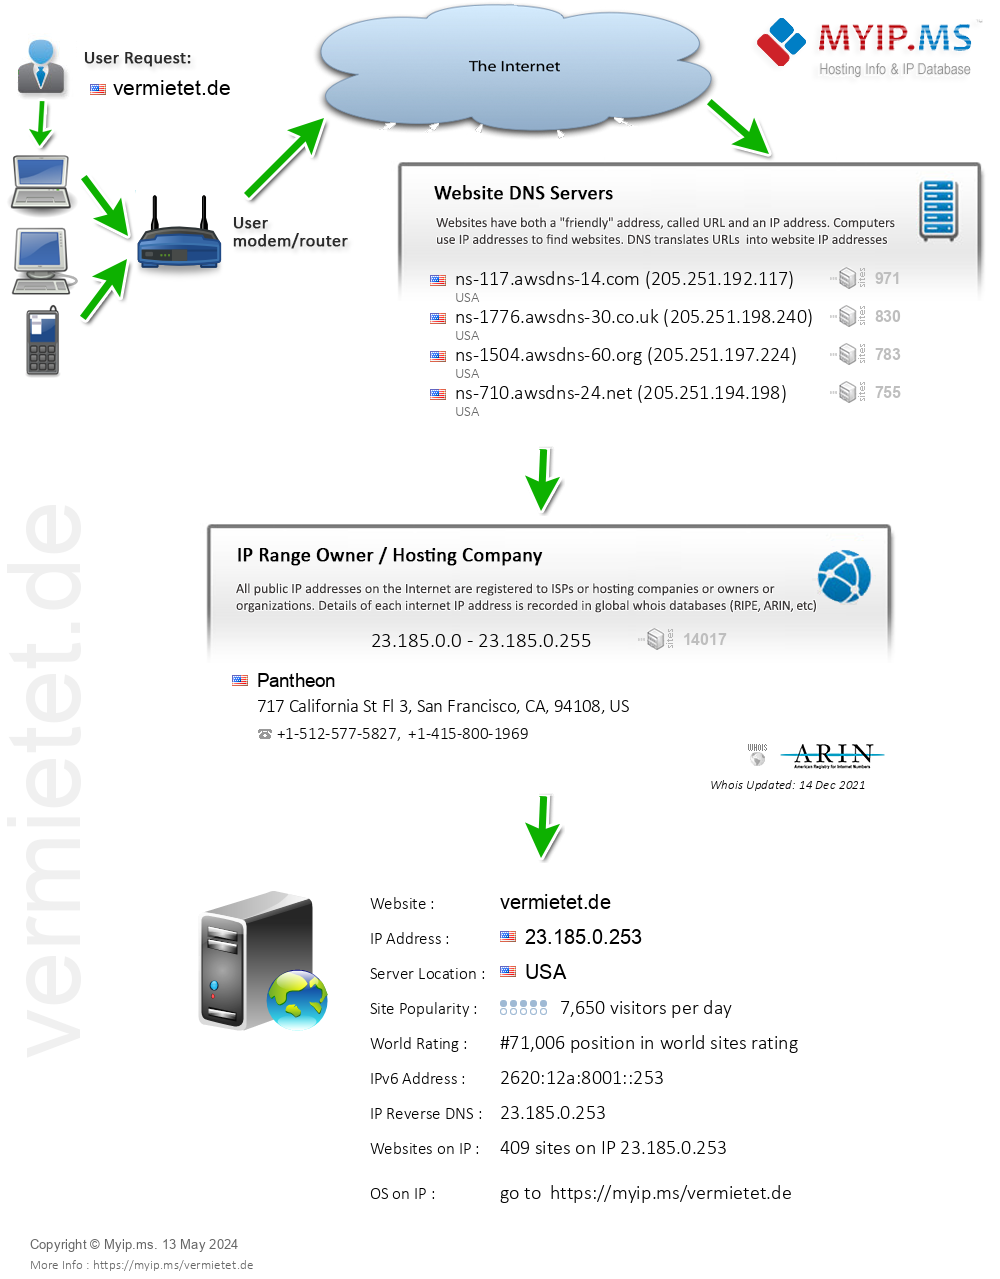 Vermietet.de - Website Hosting Visual IP Diagram